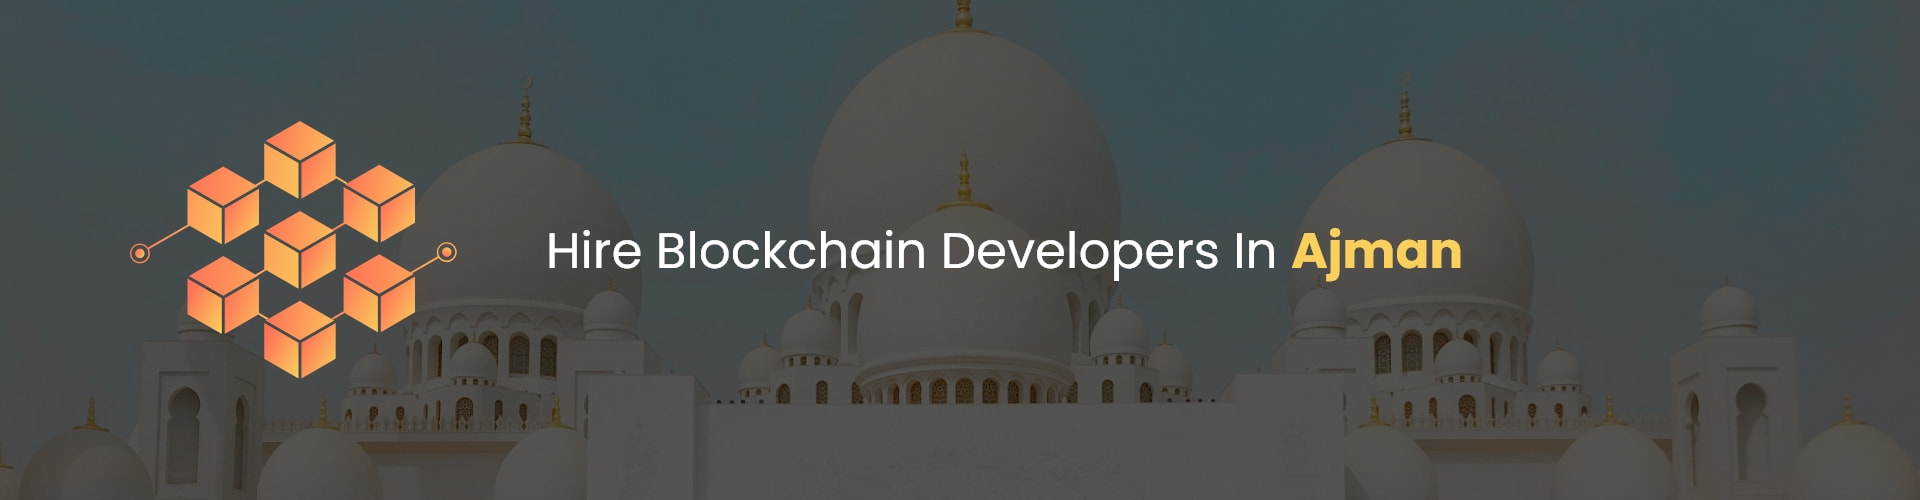 hire blockchain developers in ajman